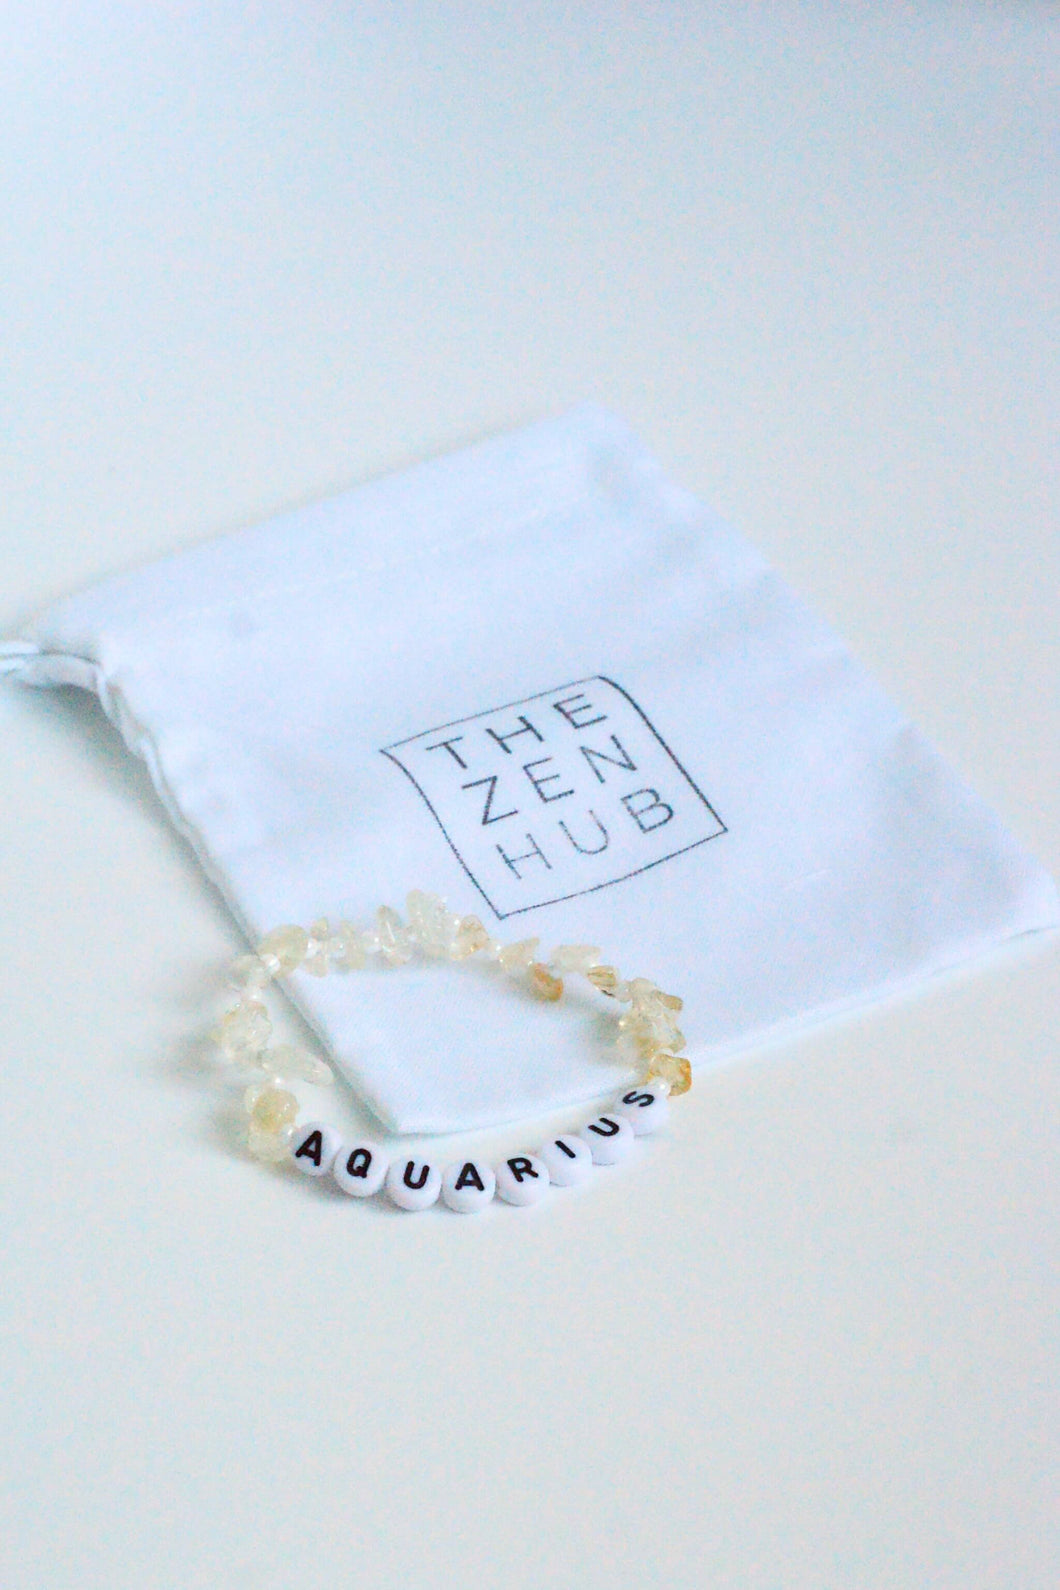 Aquarius crystal healing gemstone bracelet made from citrine on white cotton bag